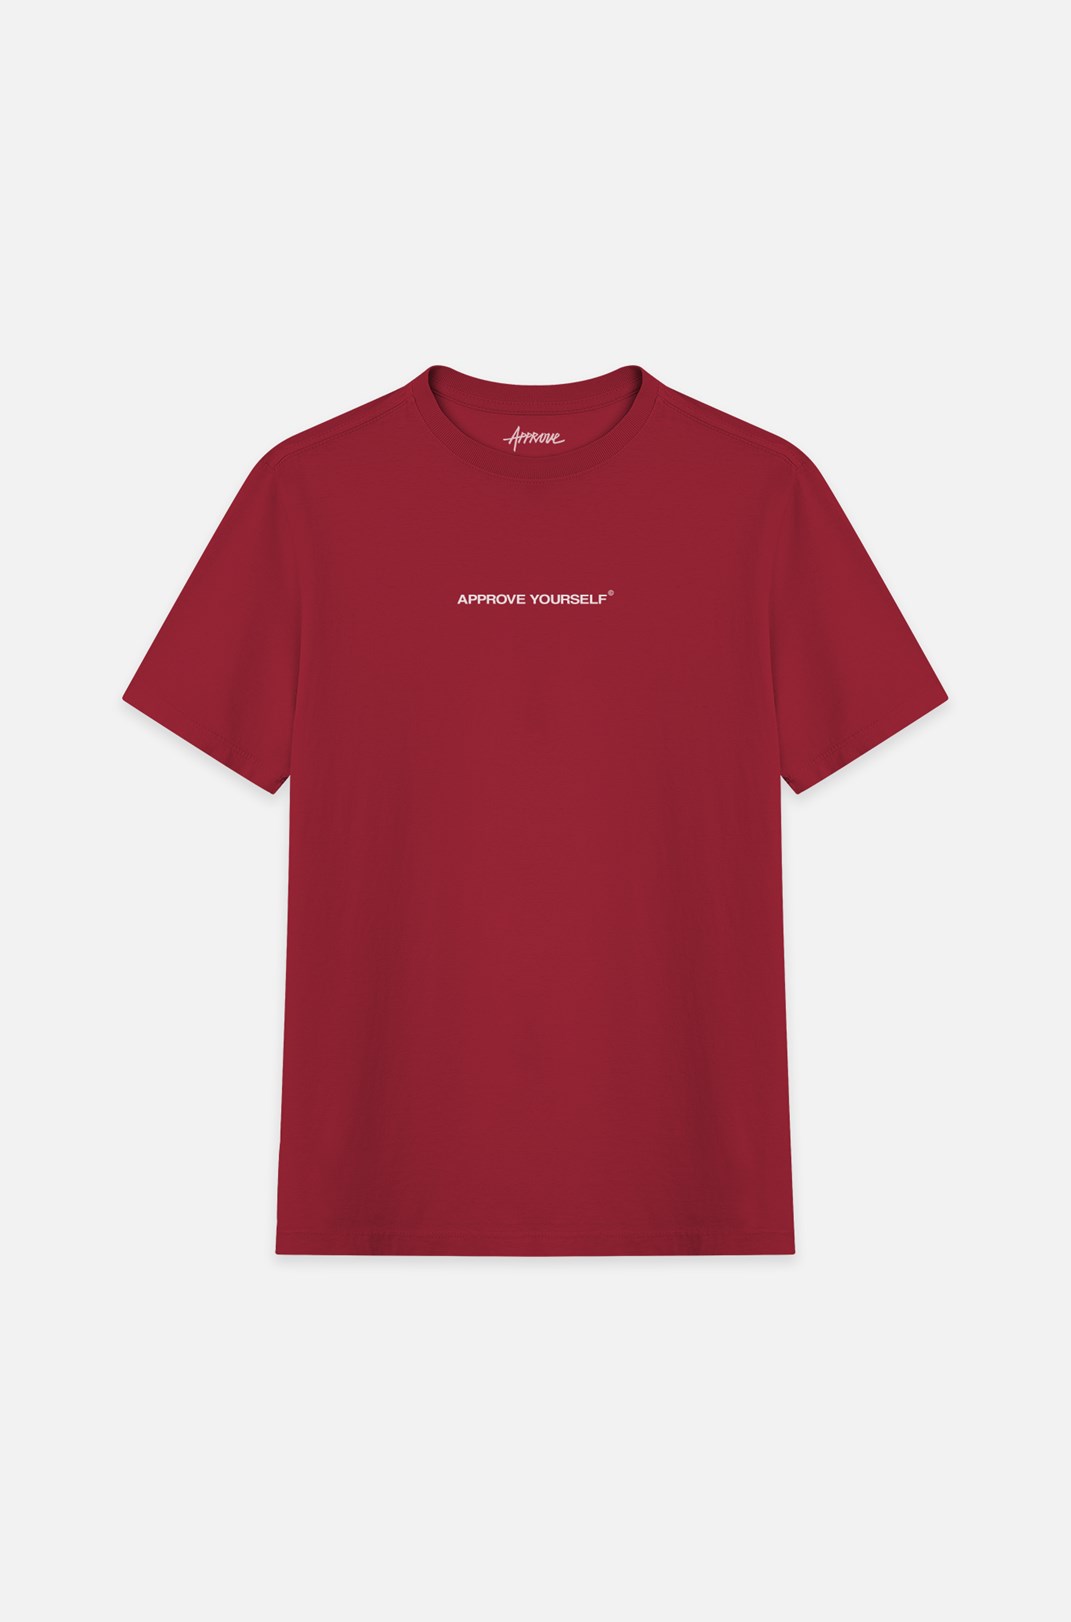 Camiseta Bold Approve Full Logo Vermelha